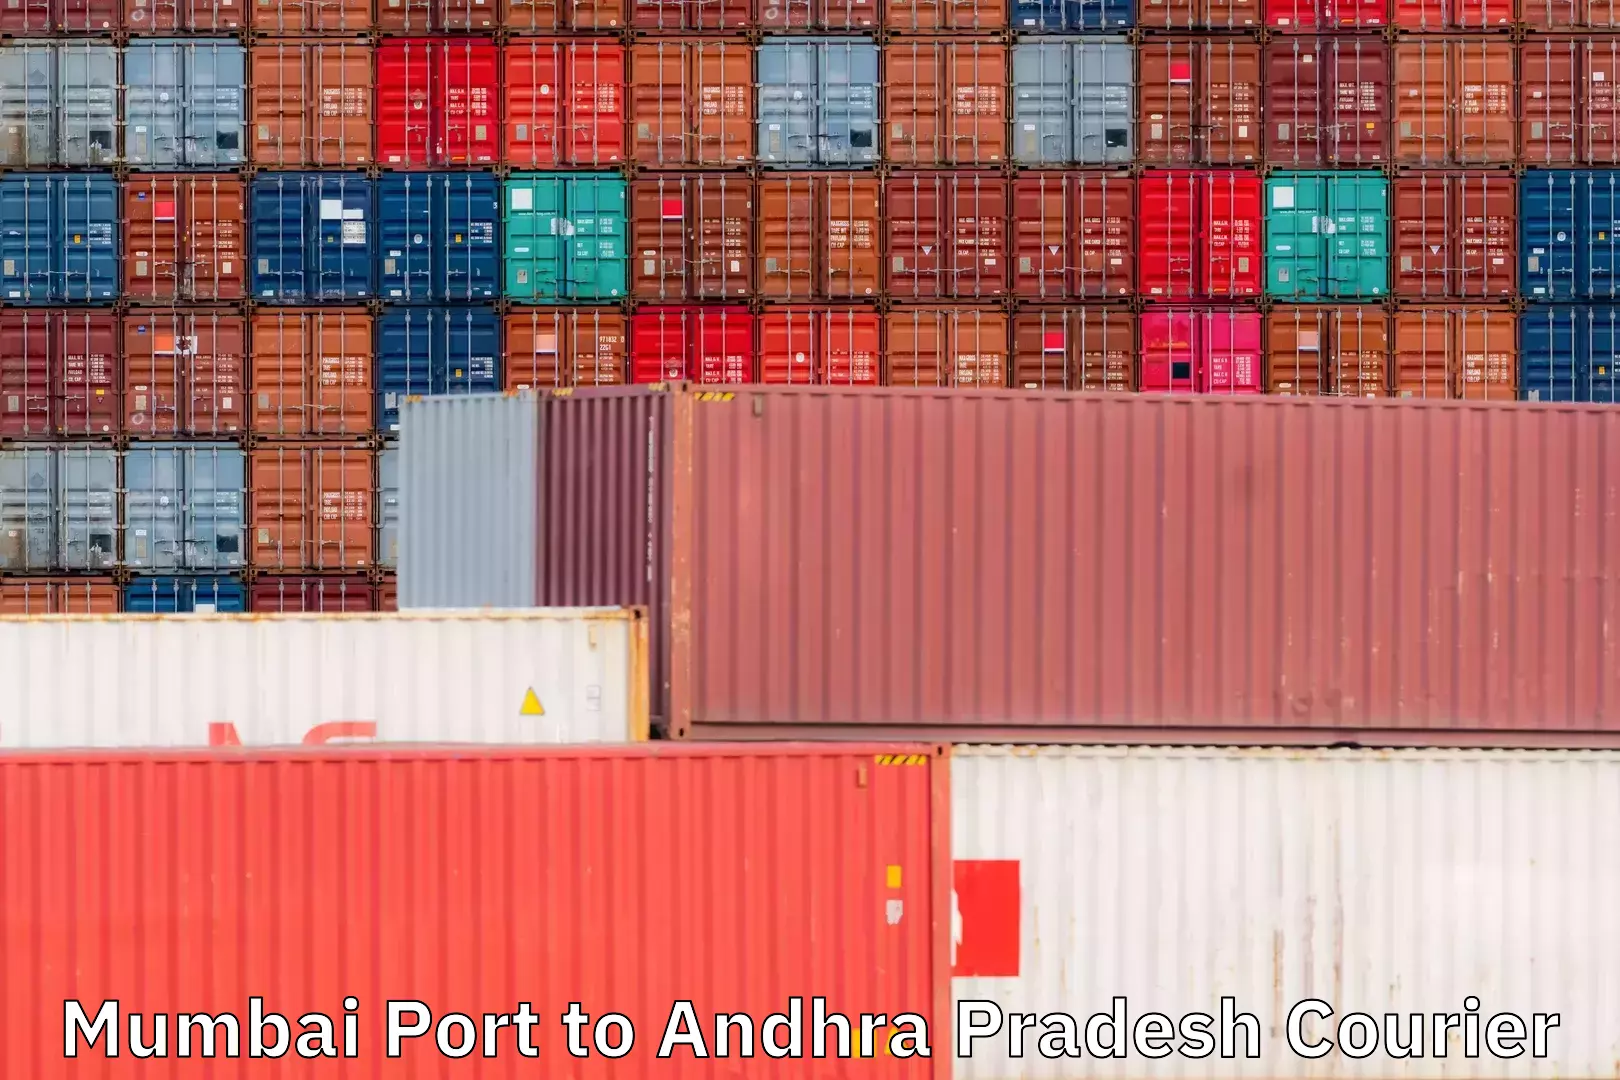 Smart shipping technology Mumbai Port to Andhra Pradesh